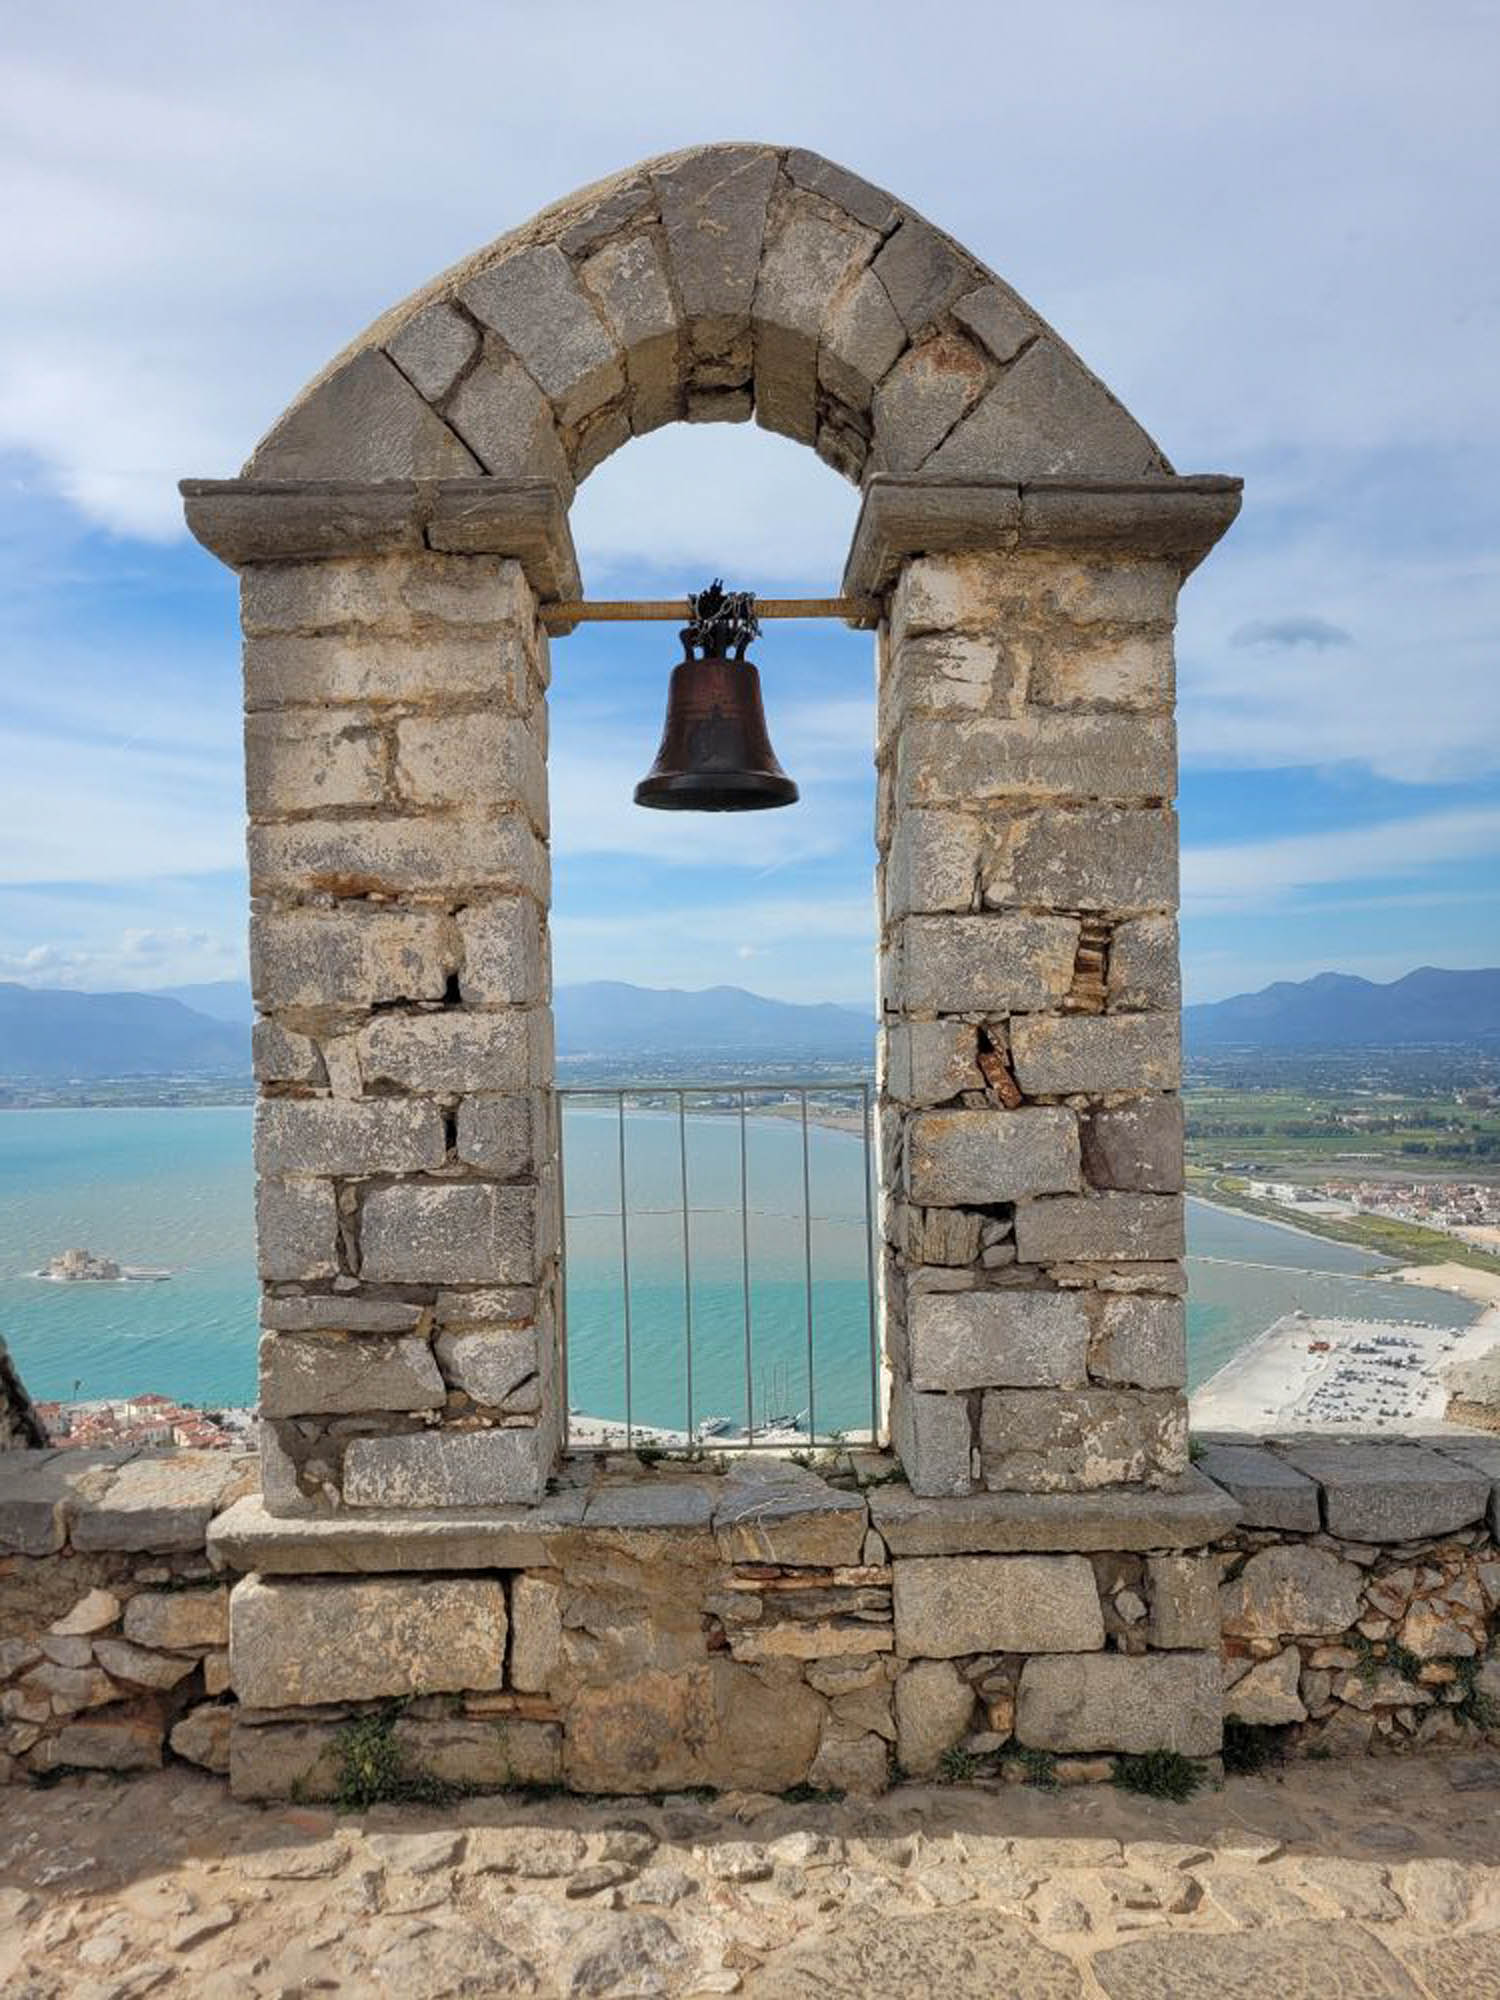 widok na stare budowle ruiny, stara dzwonnica, a za nią widok na morze i niebieskie niebo